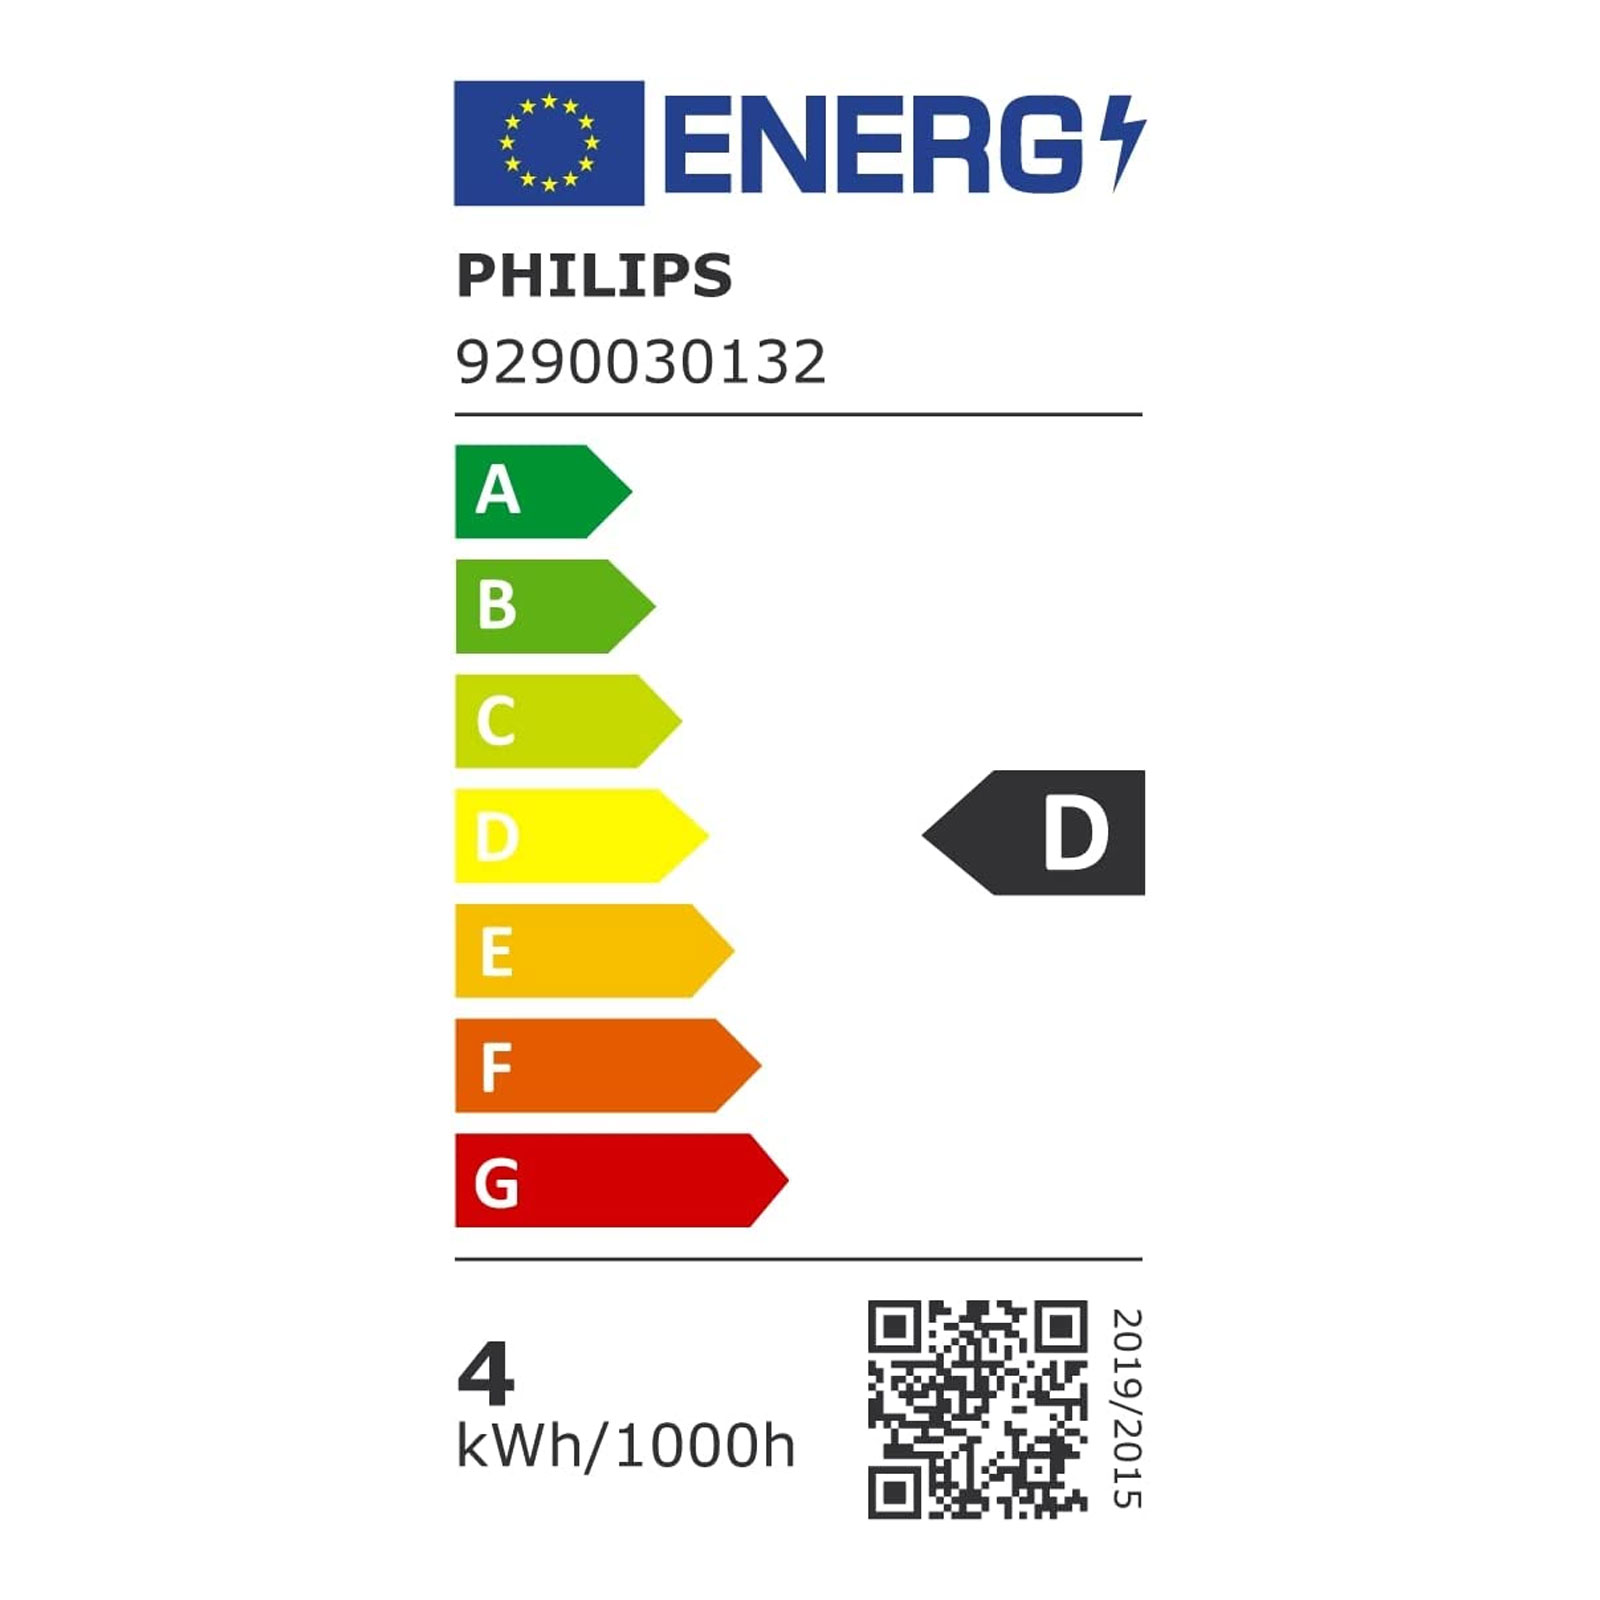 Philips LED E14 Lampe, 25 W, Tropfenform, matt, warmweiß